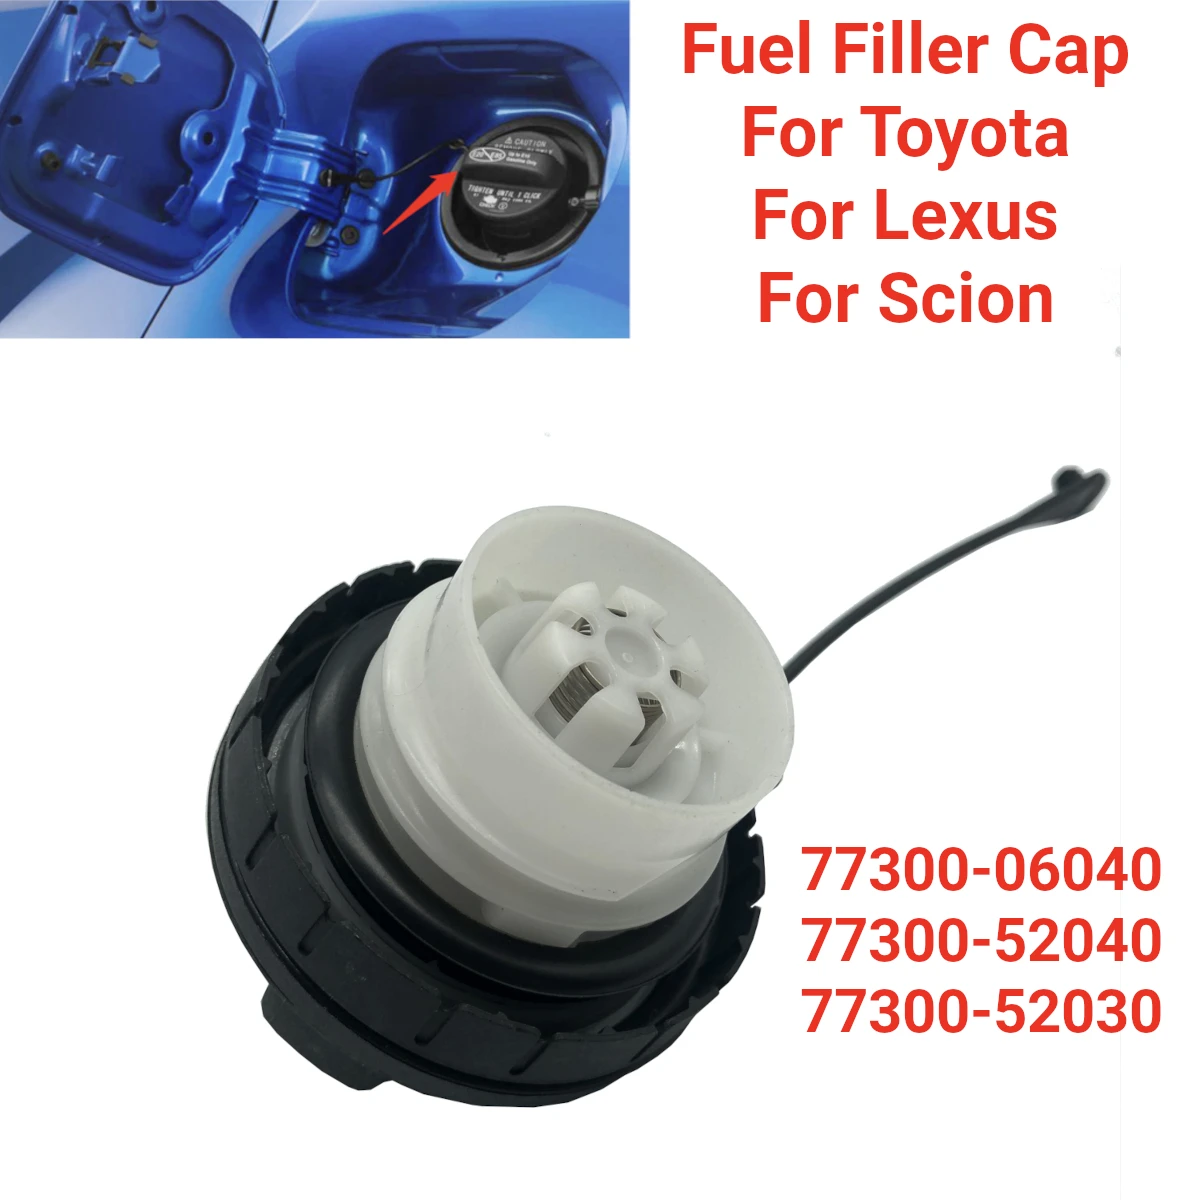 Petrol Fuel Tank Cover Gas Cap 77300-52030 for Toyota Camry Corolla Hilux Rav4 Sequoia Solara Highlander For Lexus LS LX ES